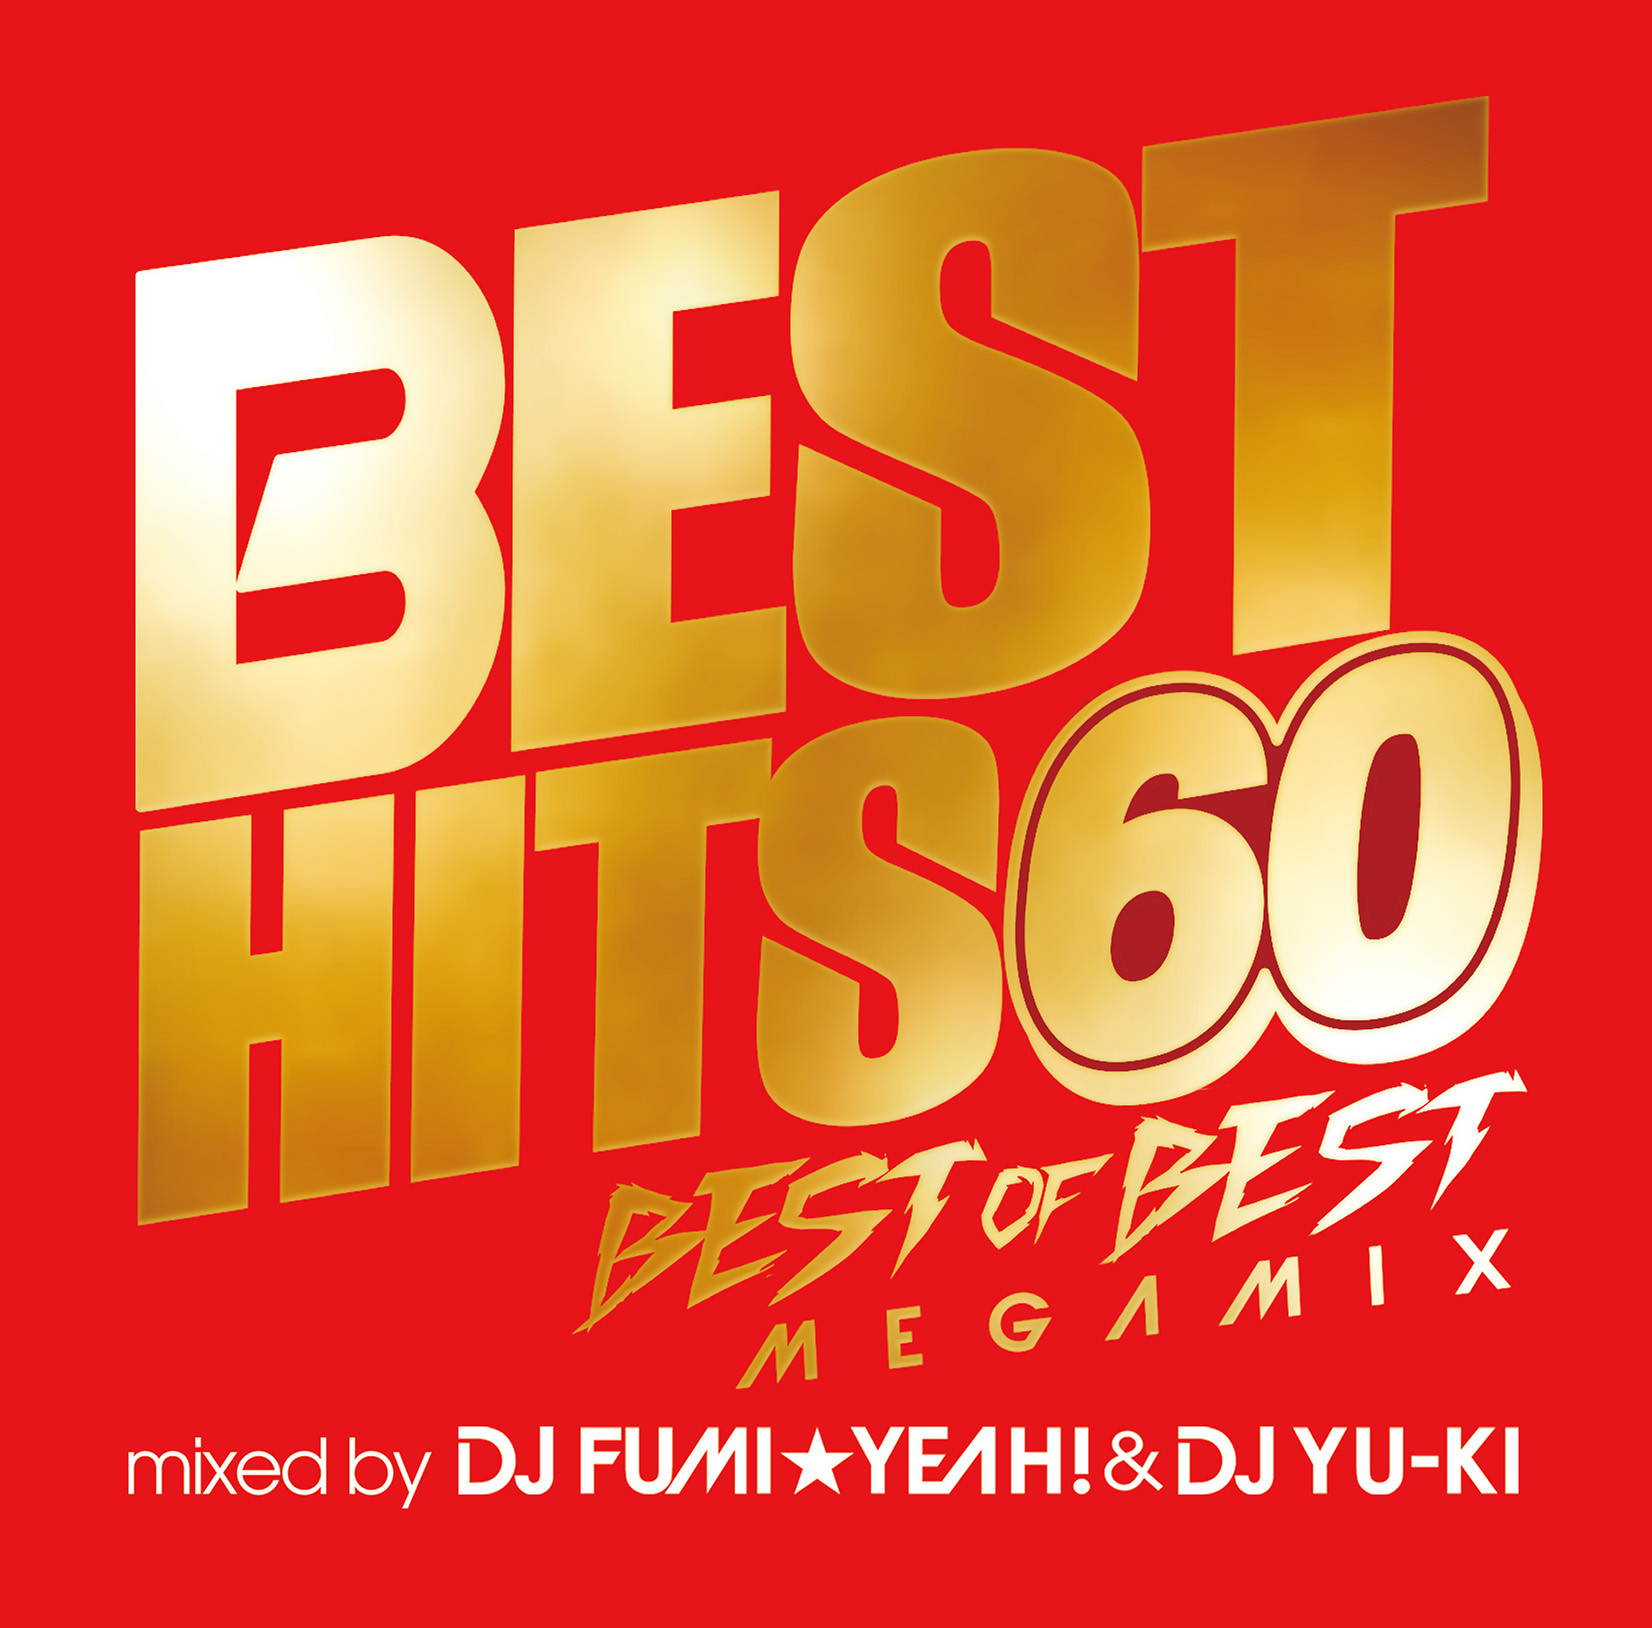 BEST HITS 60 BEST OF BEST Megamix mixed by DJ FUMI☆YEAH!  DJ YU-KI - AQUA  PRODUCTION